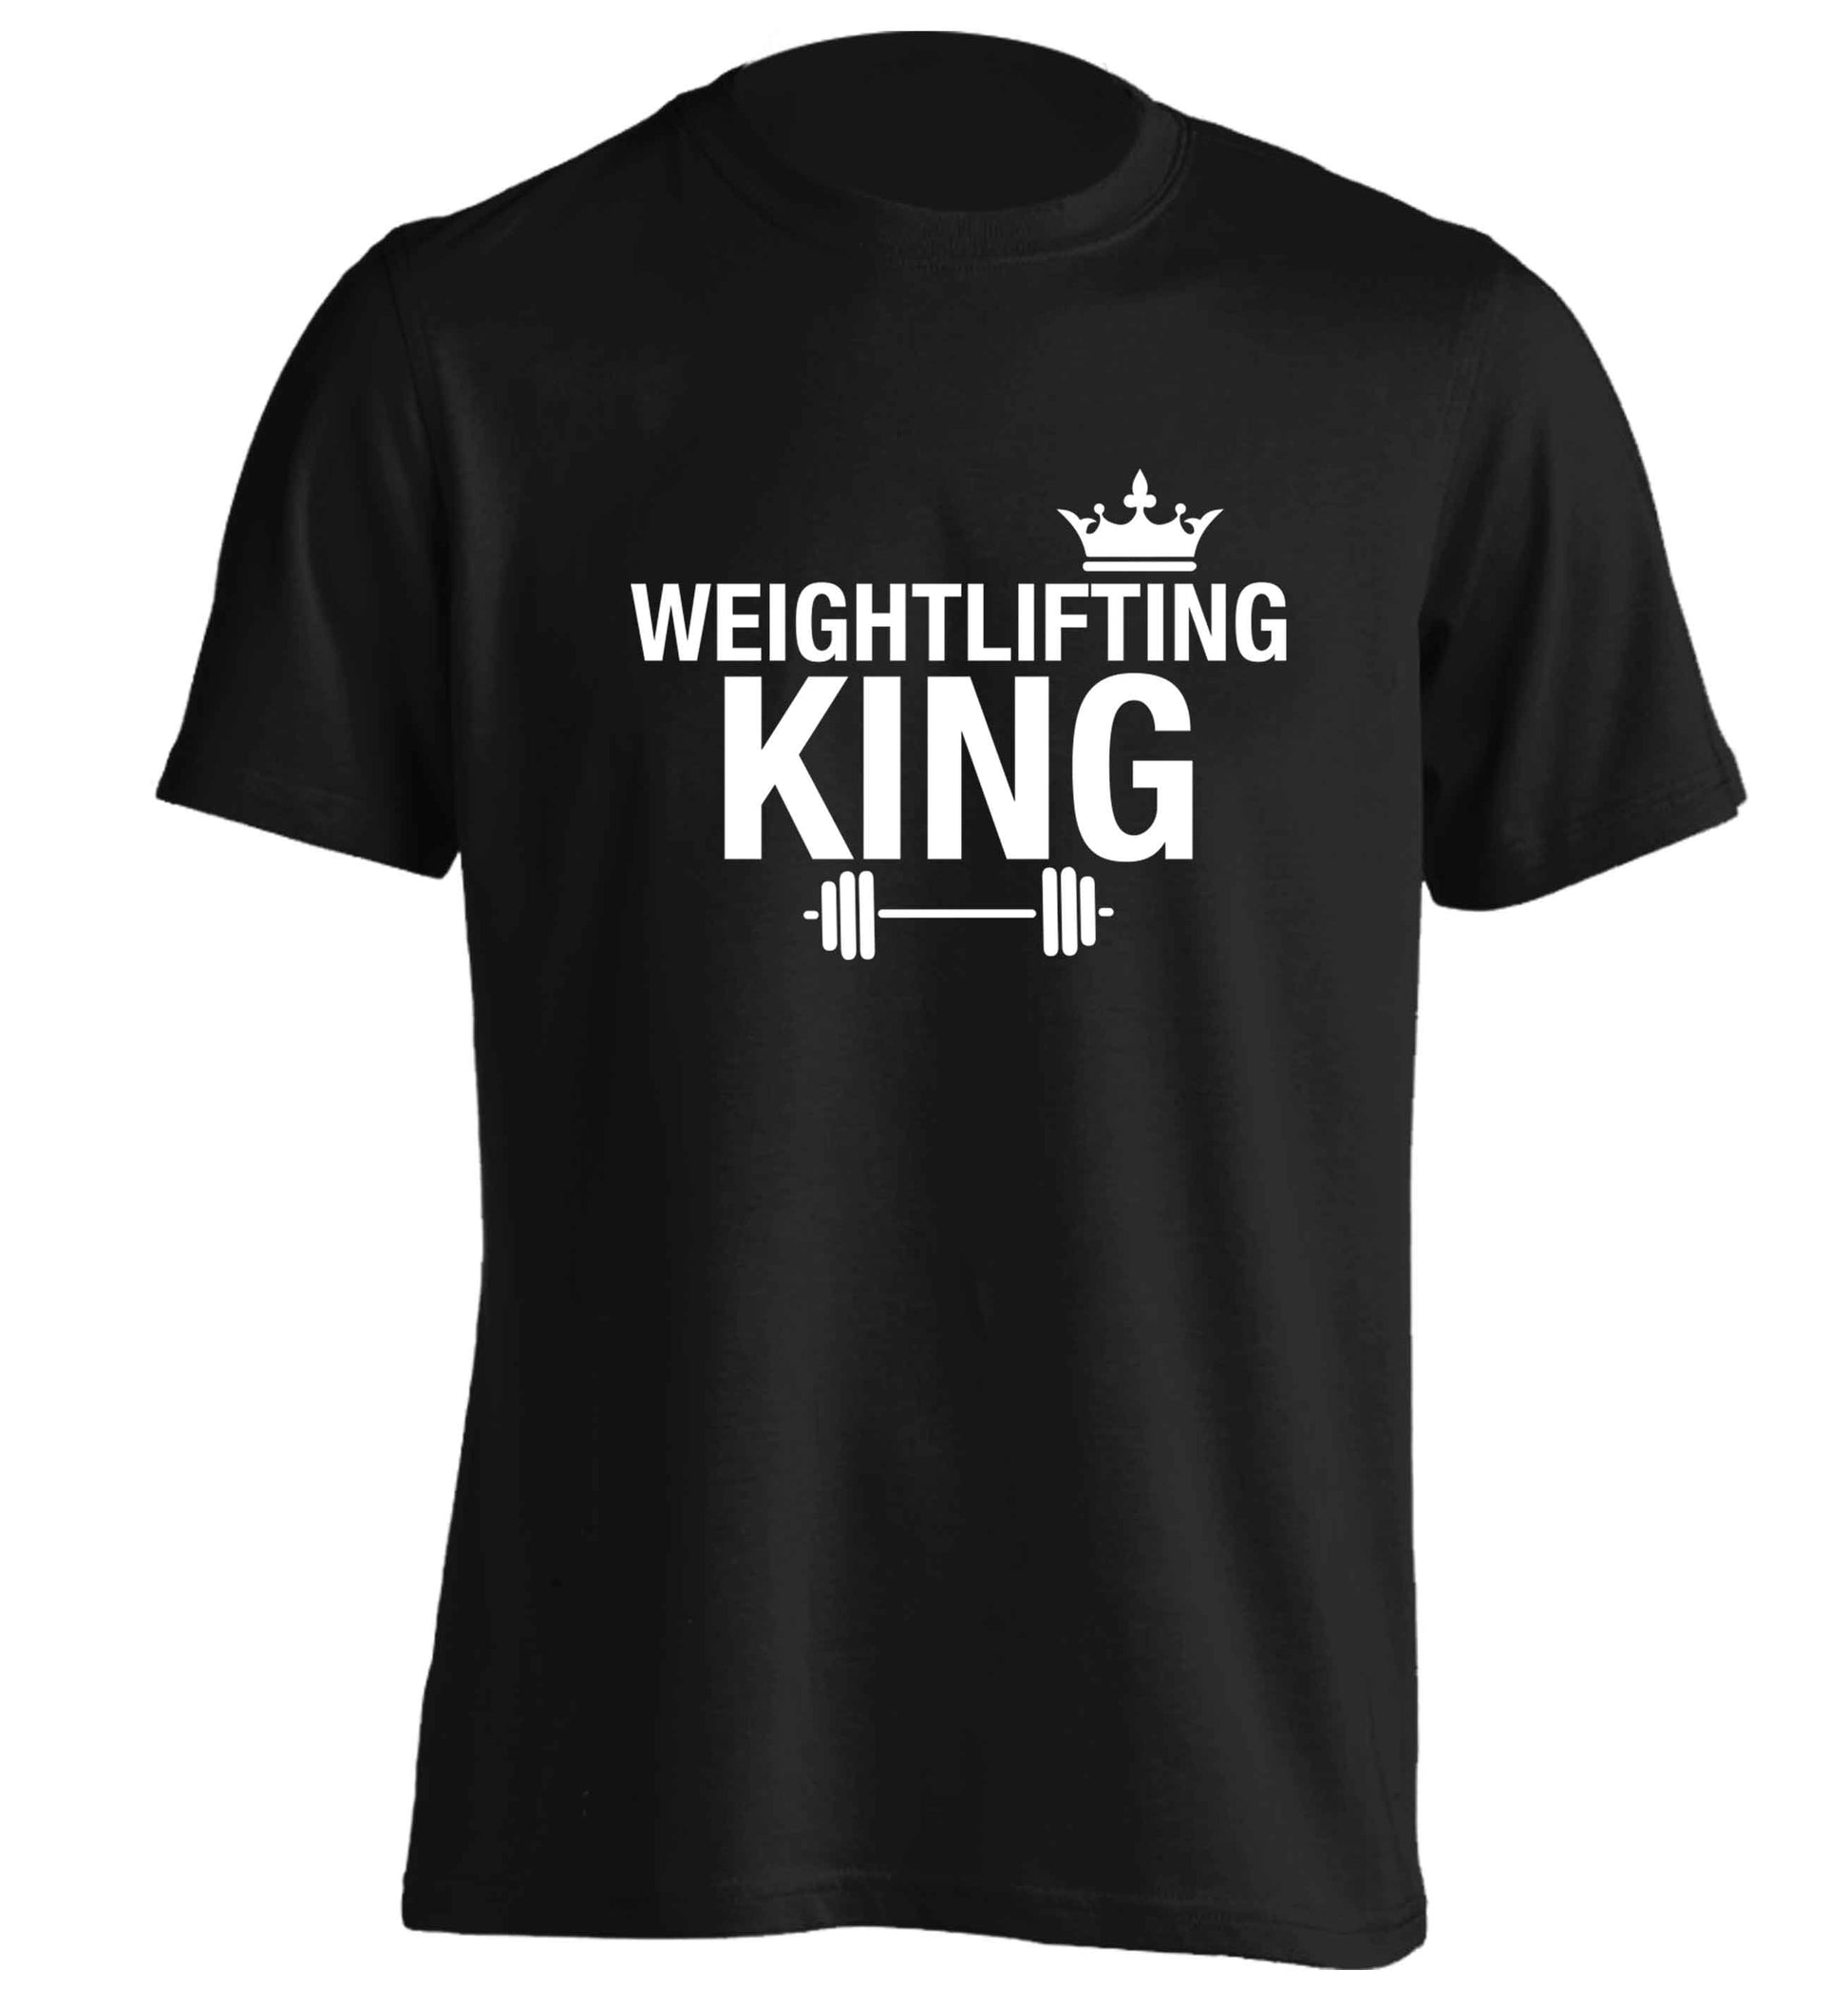 Weightlifting king adults unisex black Tshirt 2XL